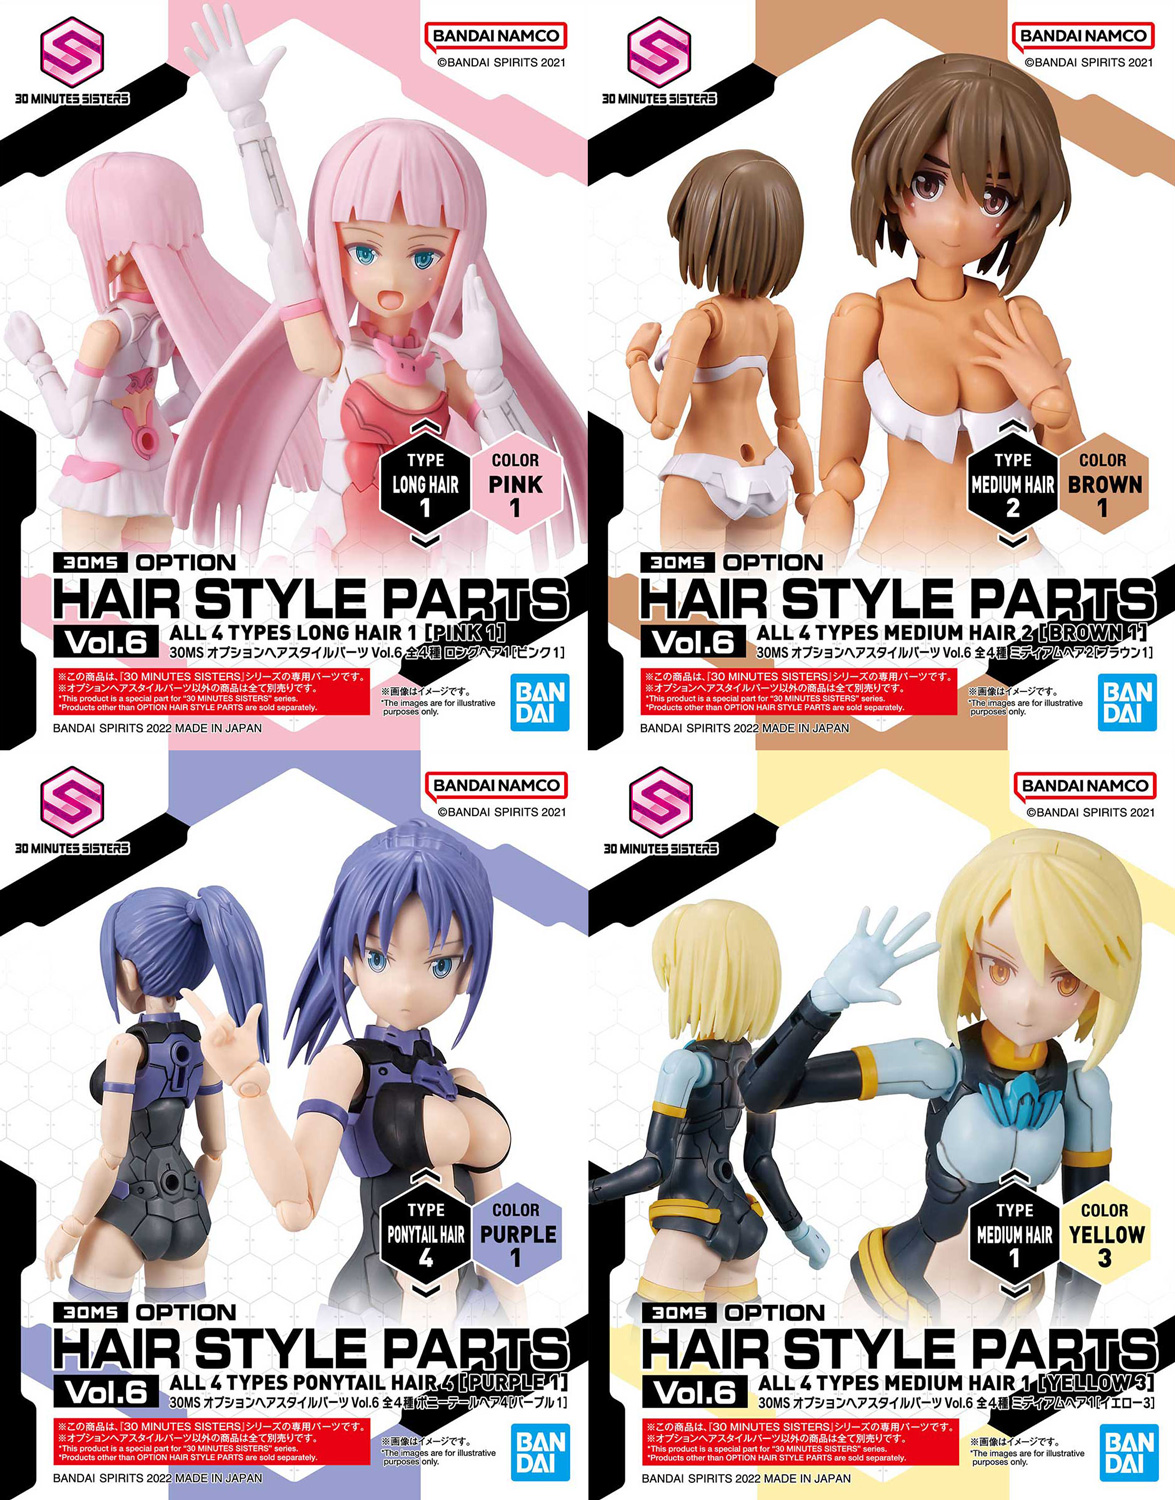 BANDAI 30MS Option Hair Style Parts Vol.6 All 4 Types